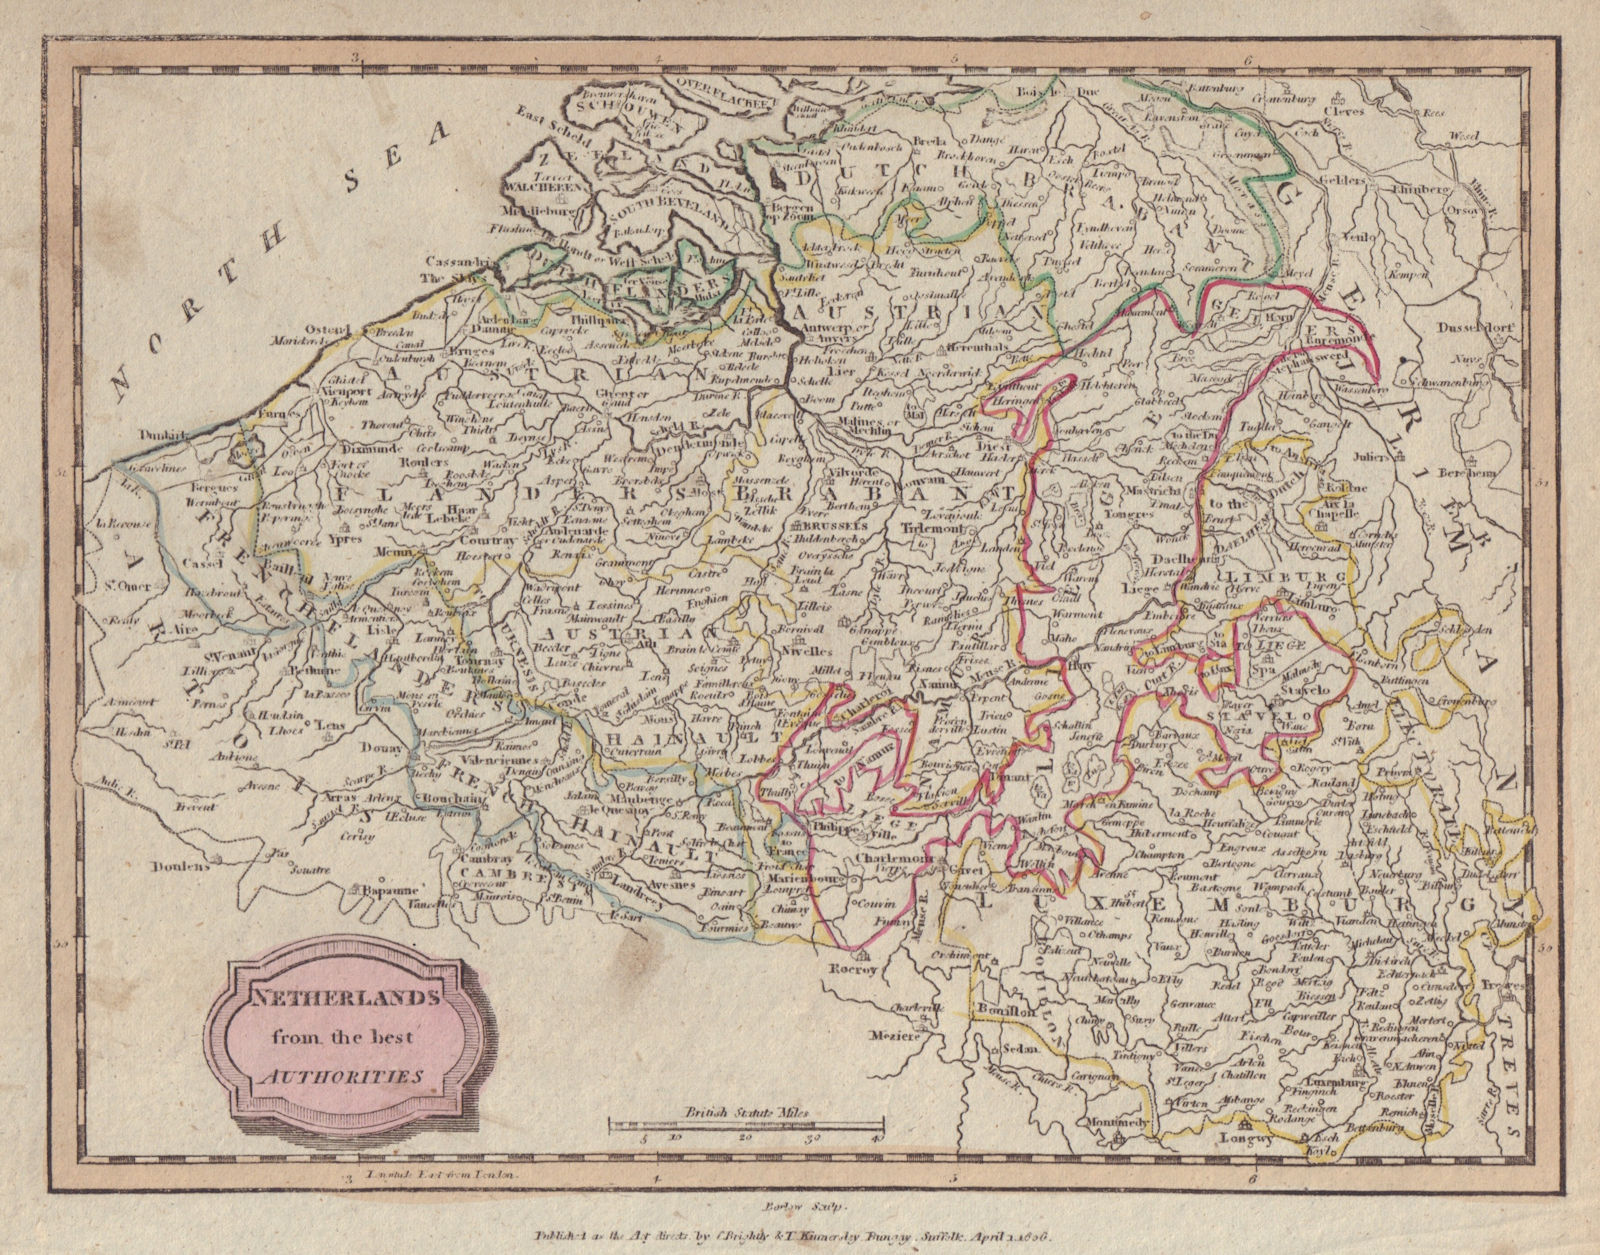 Belgium & Luxembourg. "Netherlands from the best authorities". BARLOW 1806 map